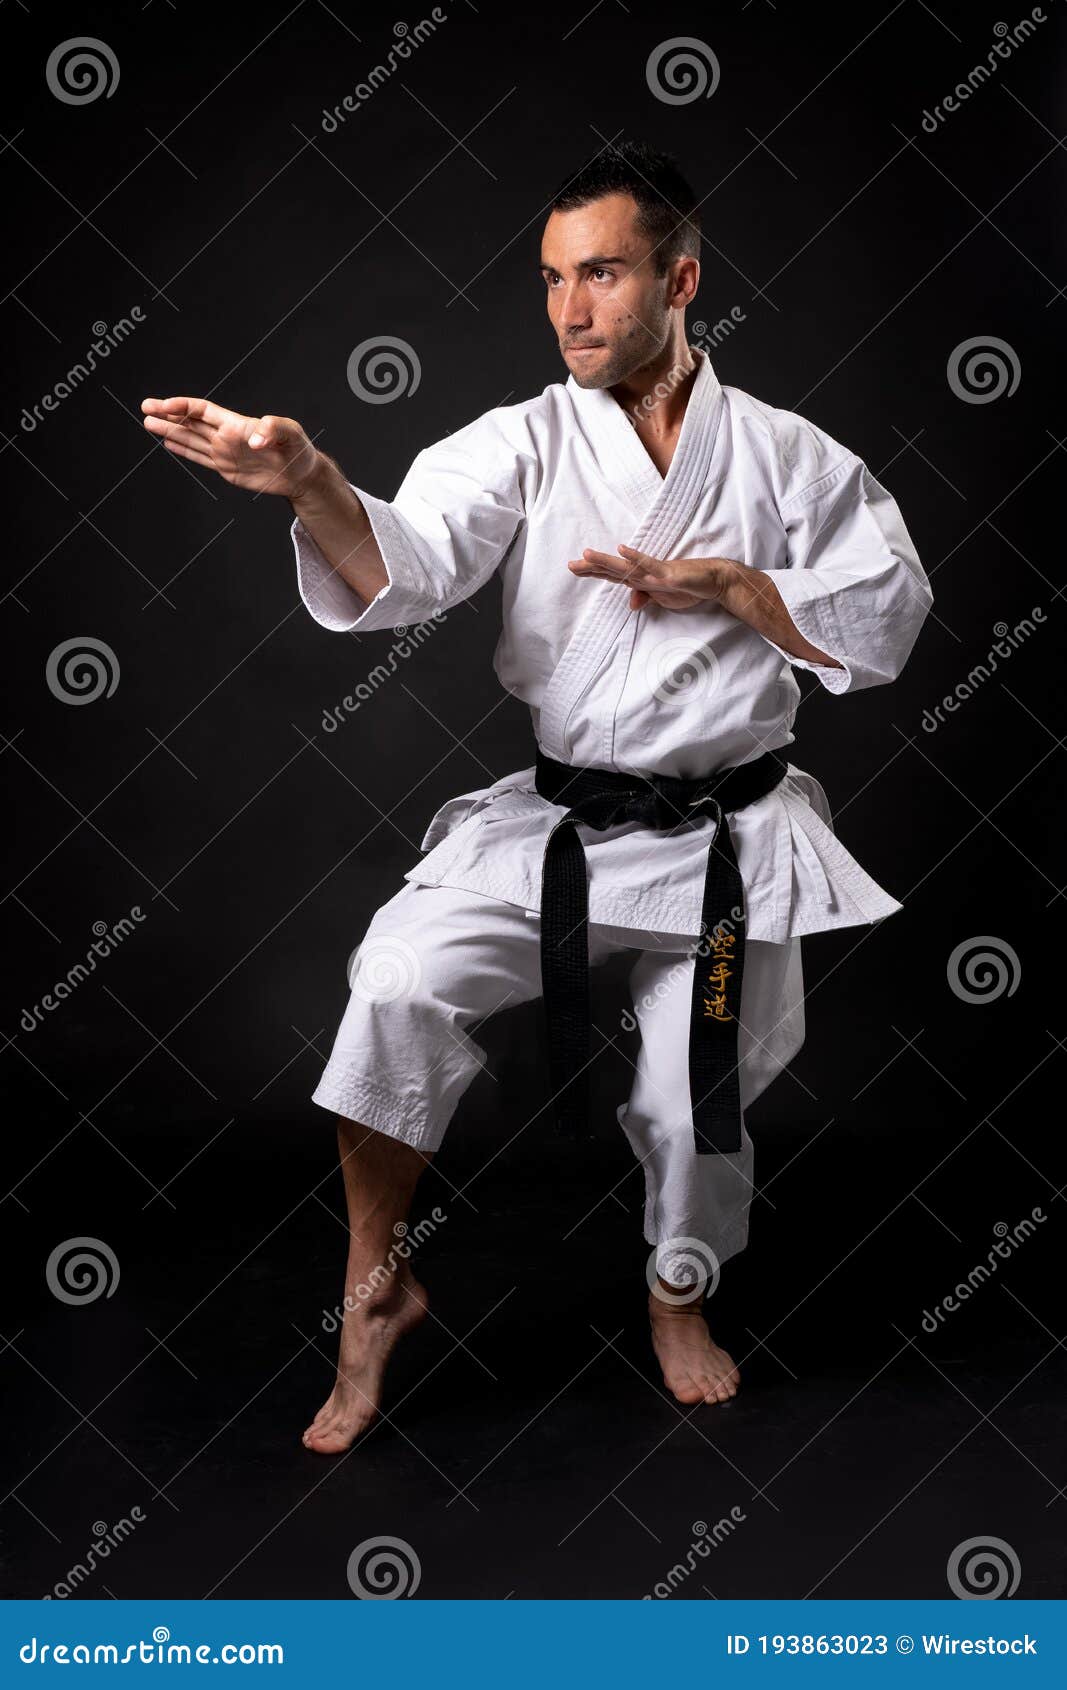 karateka practicing kata with black background